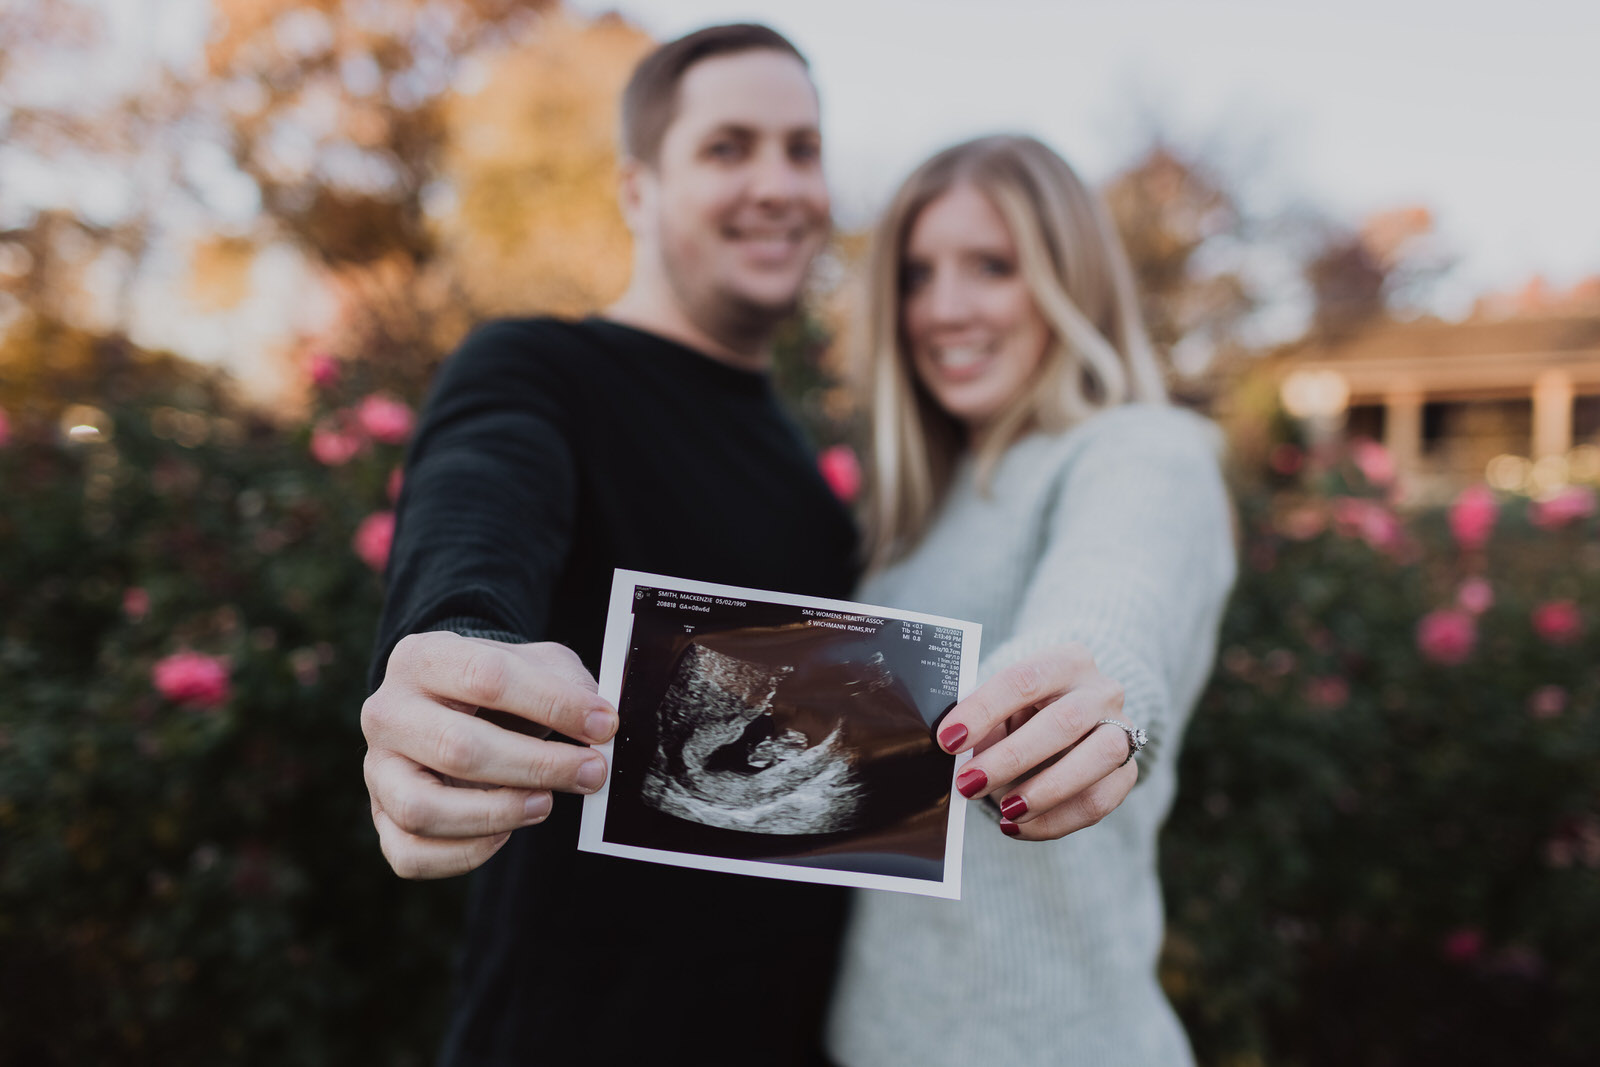 Pregnancy Announcement photos at Loose Park in Kansas City